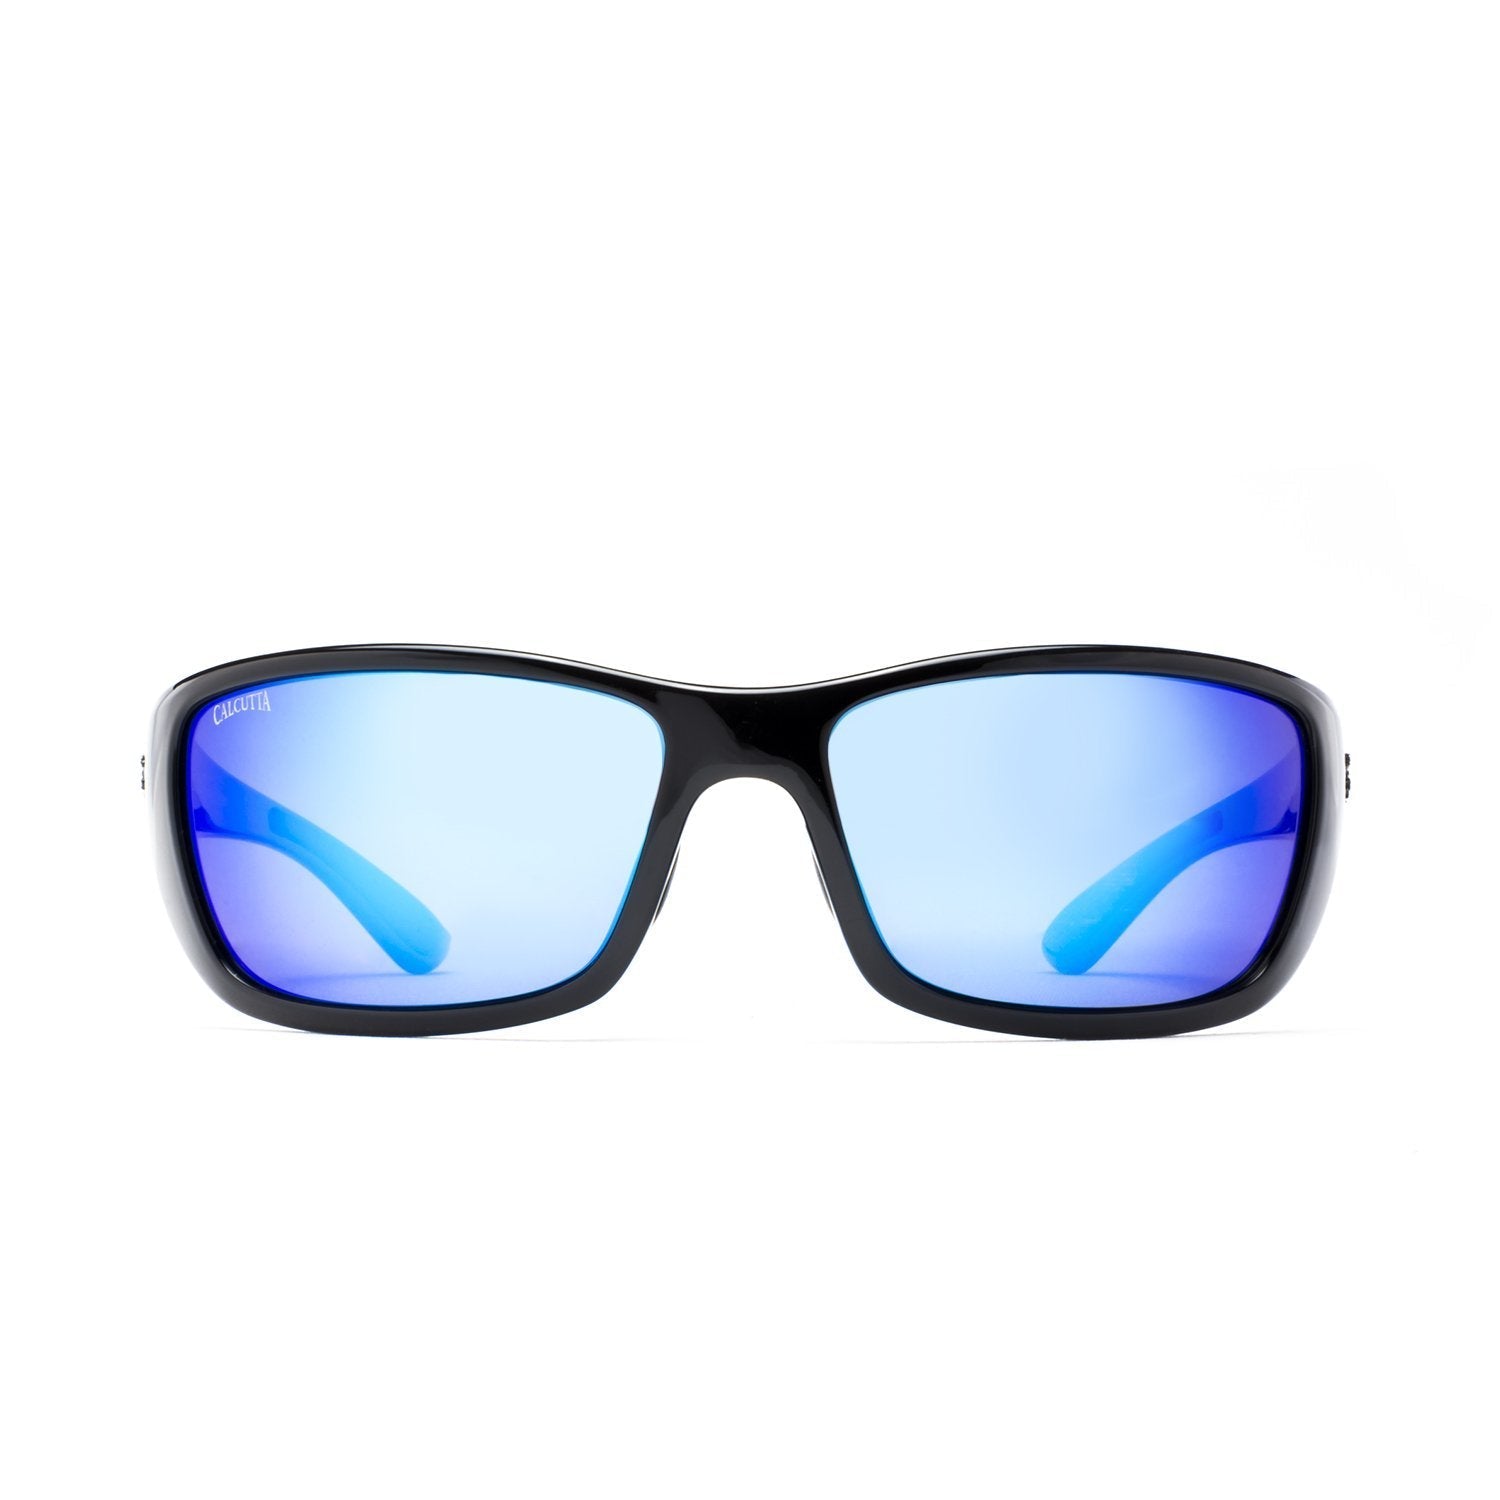 Calcutta Boca sunglasses black frame blue mirror lens front